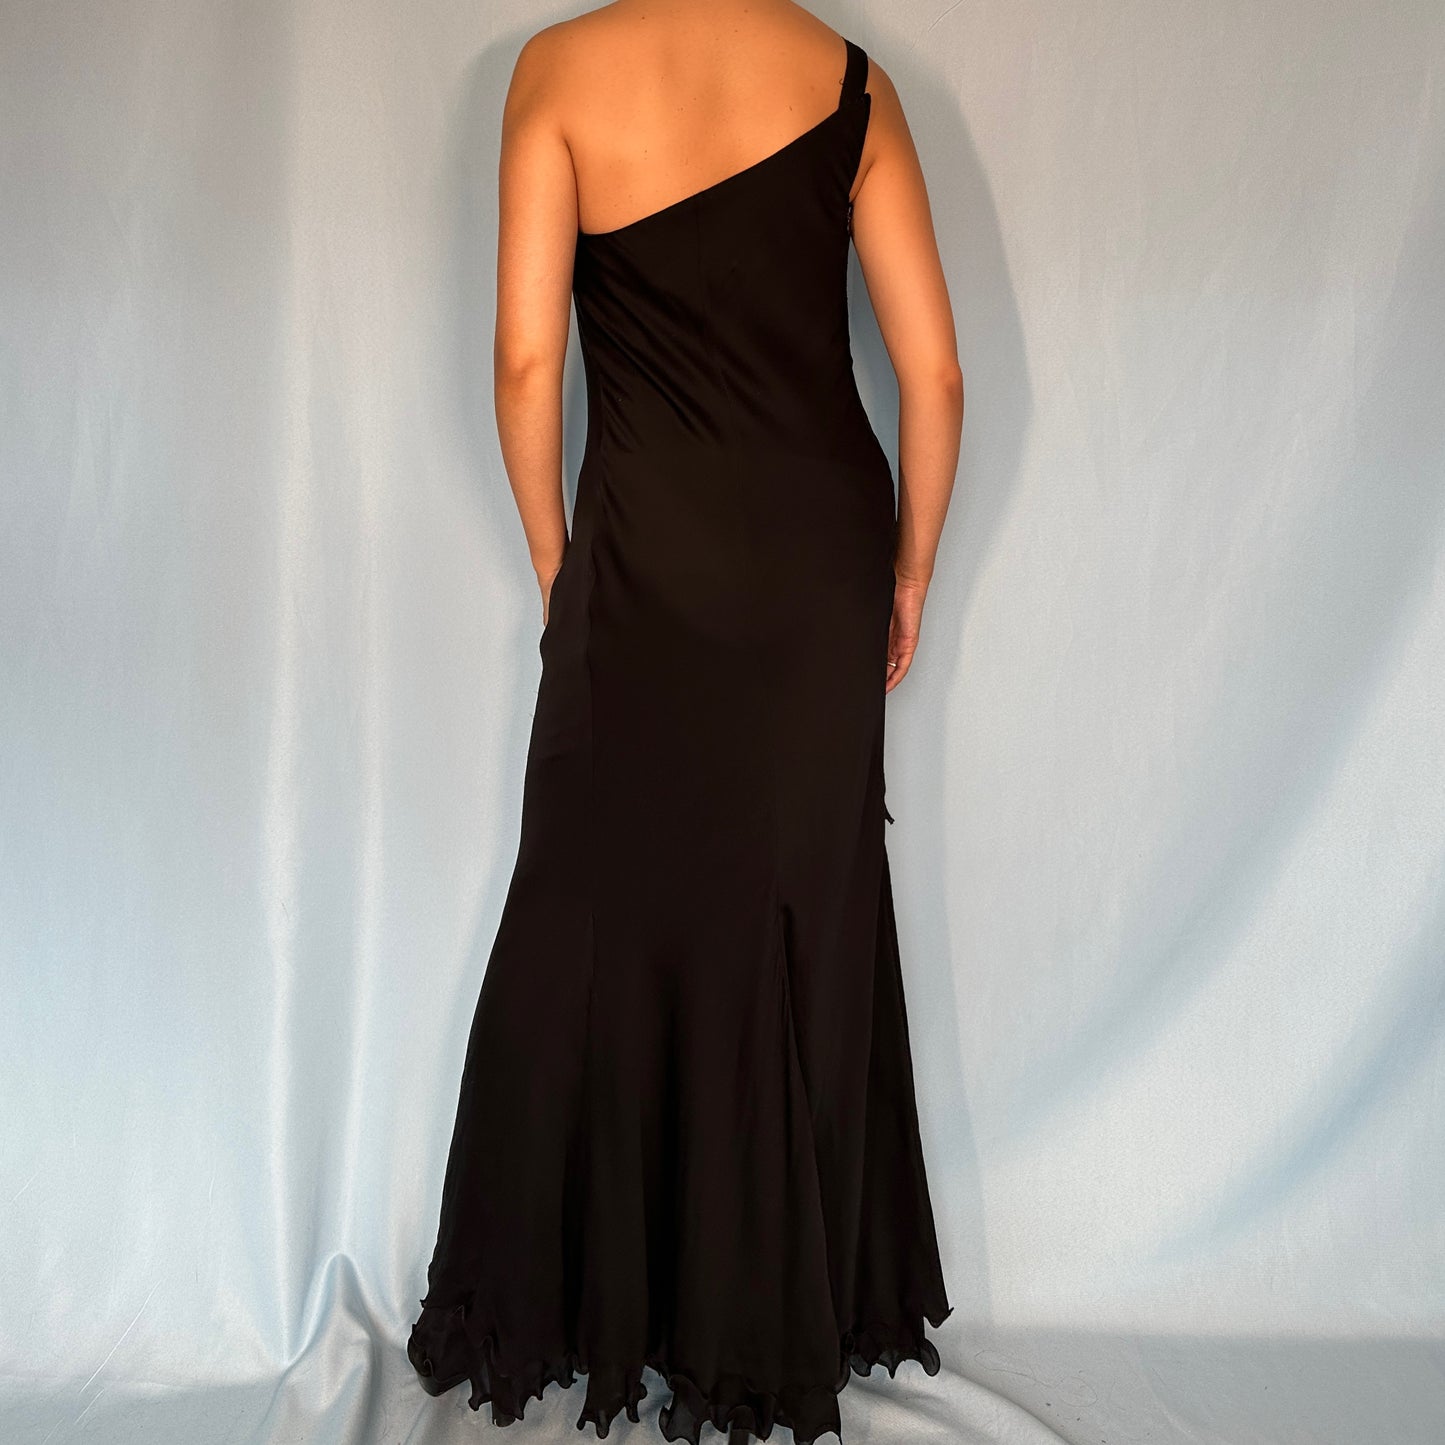 Versace Spring 1995 One Shoulder Black Silk Gown Dress